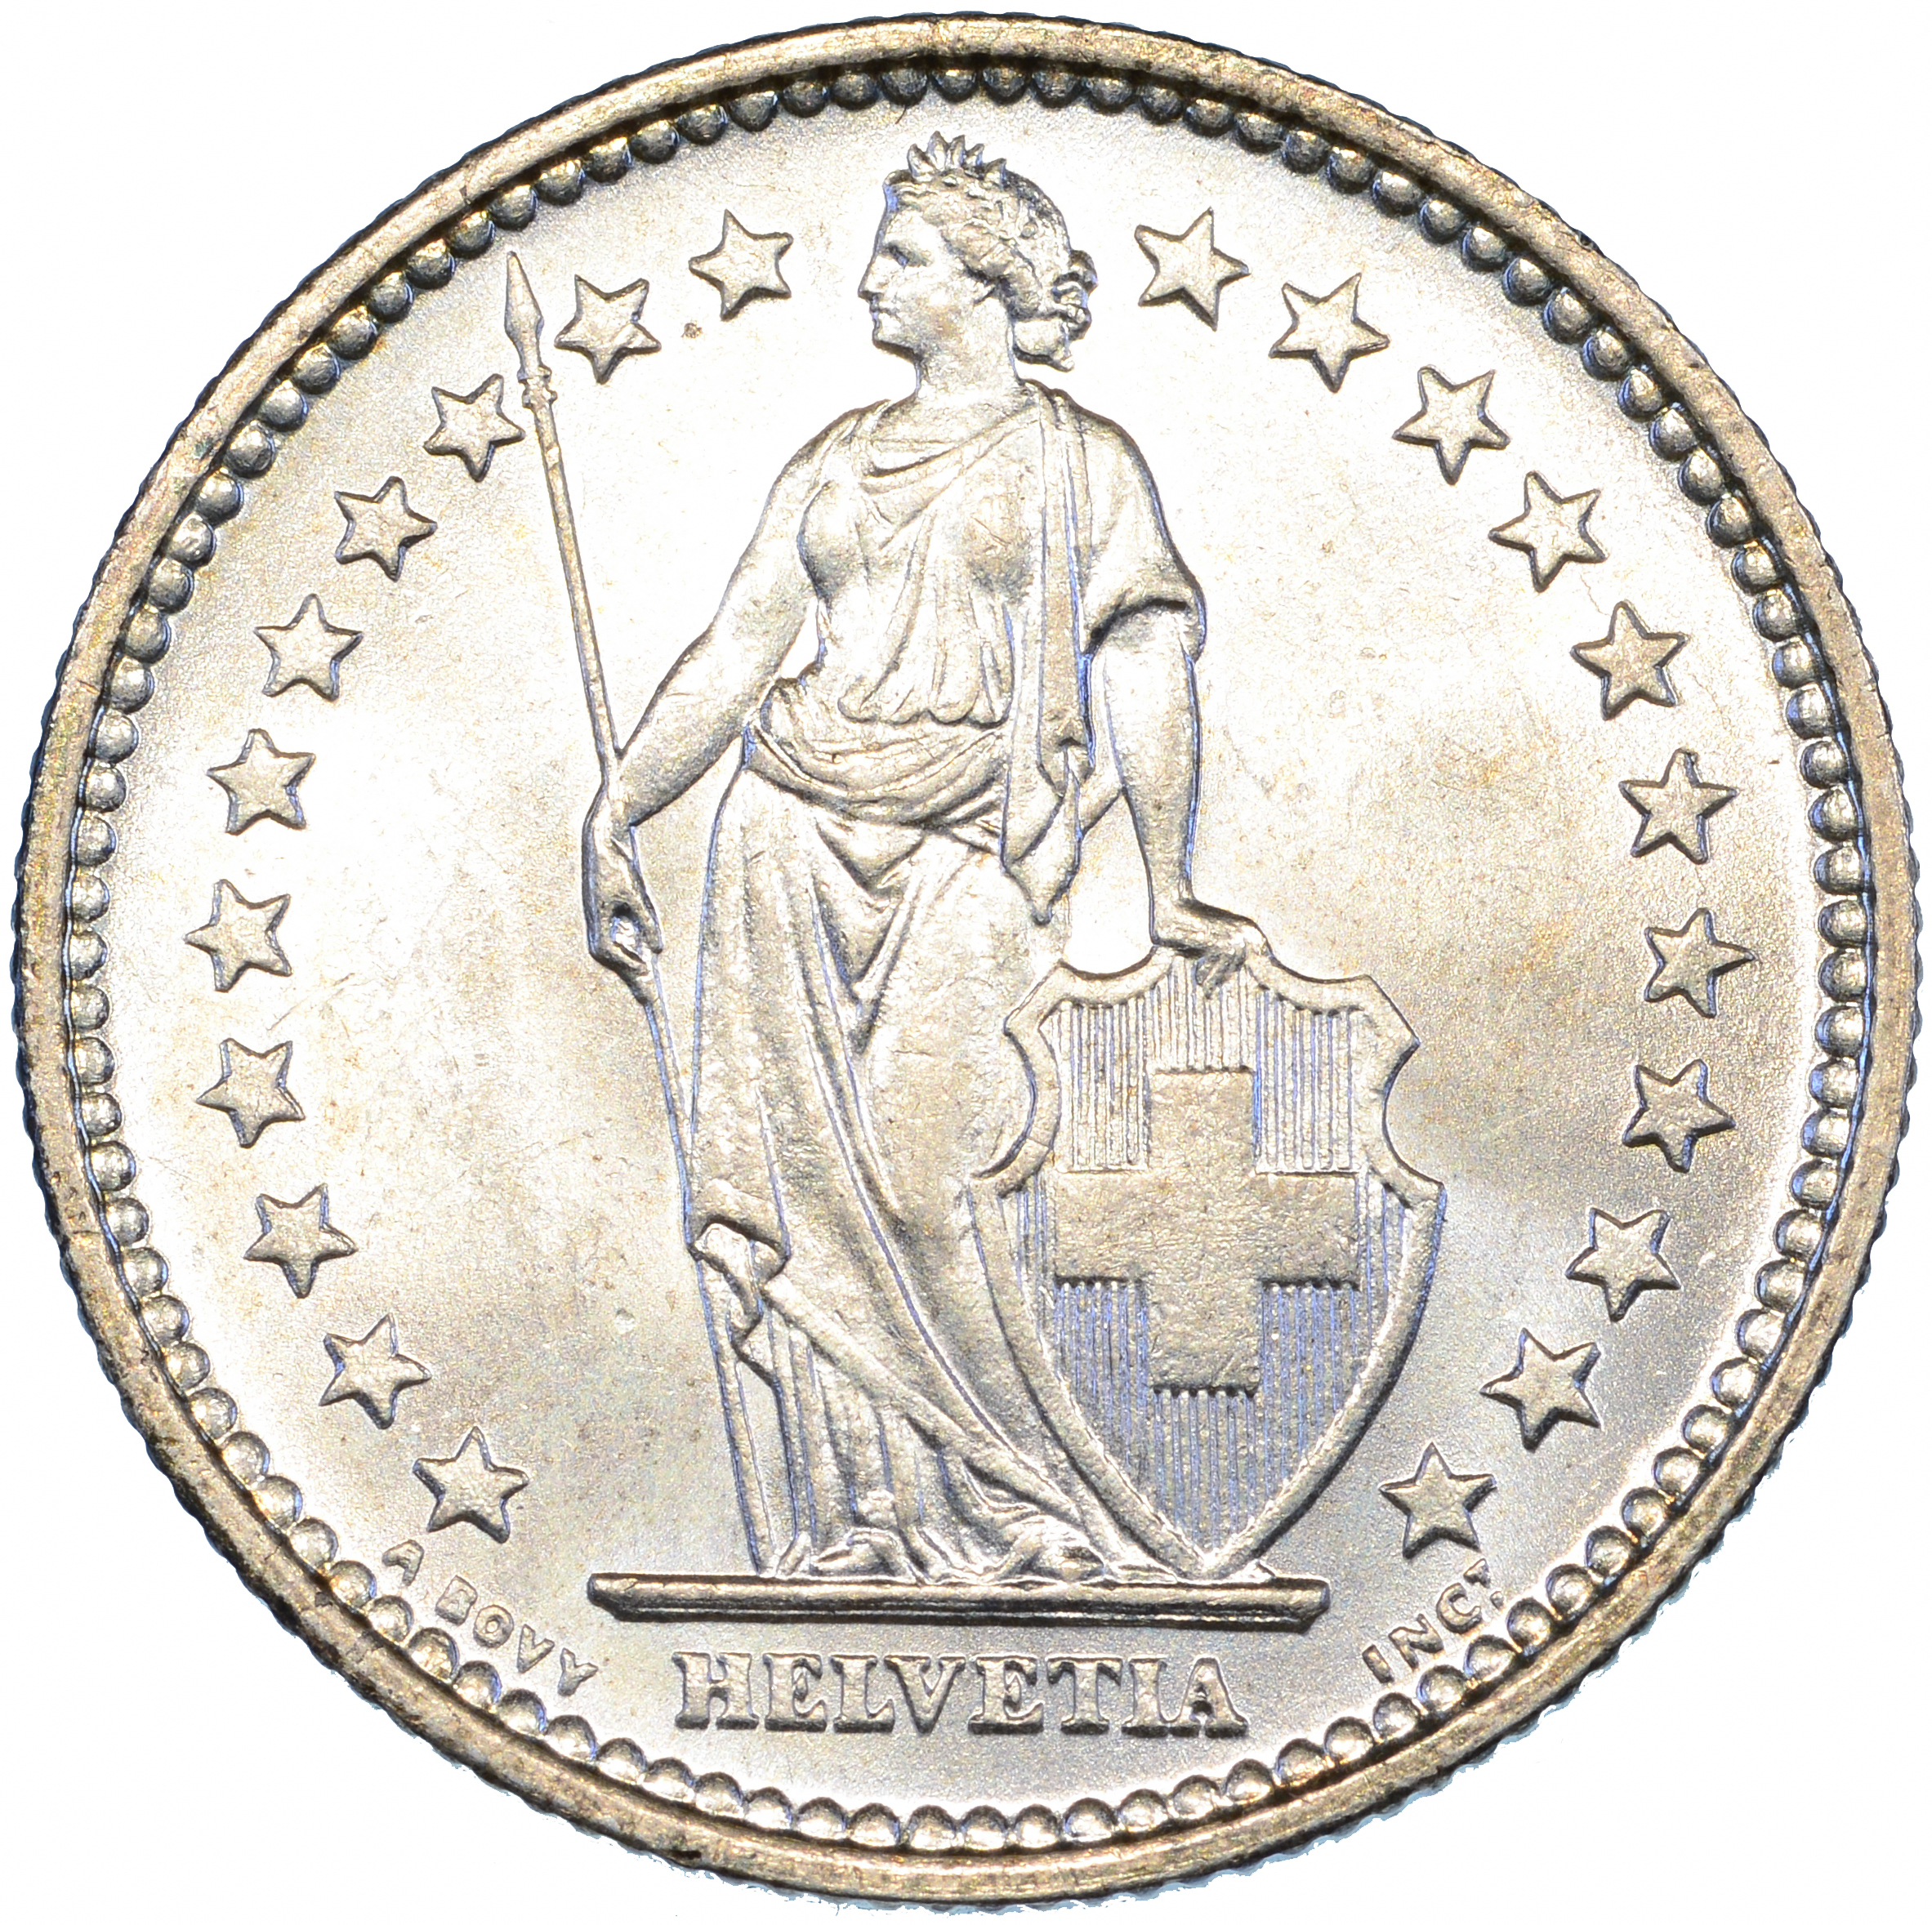 2 Franken, 1906, Stempelglanz